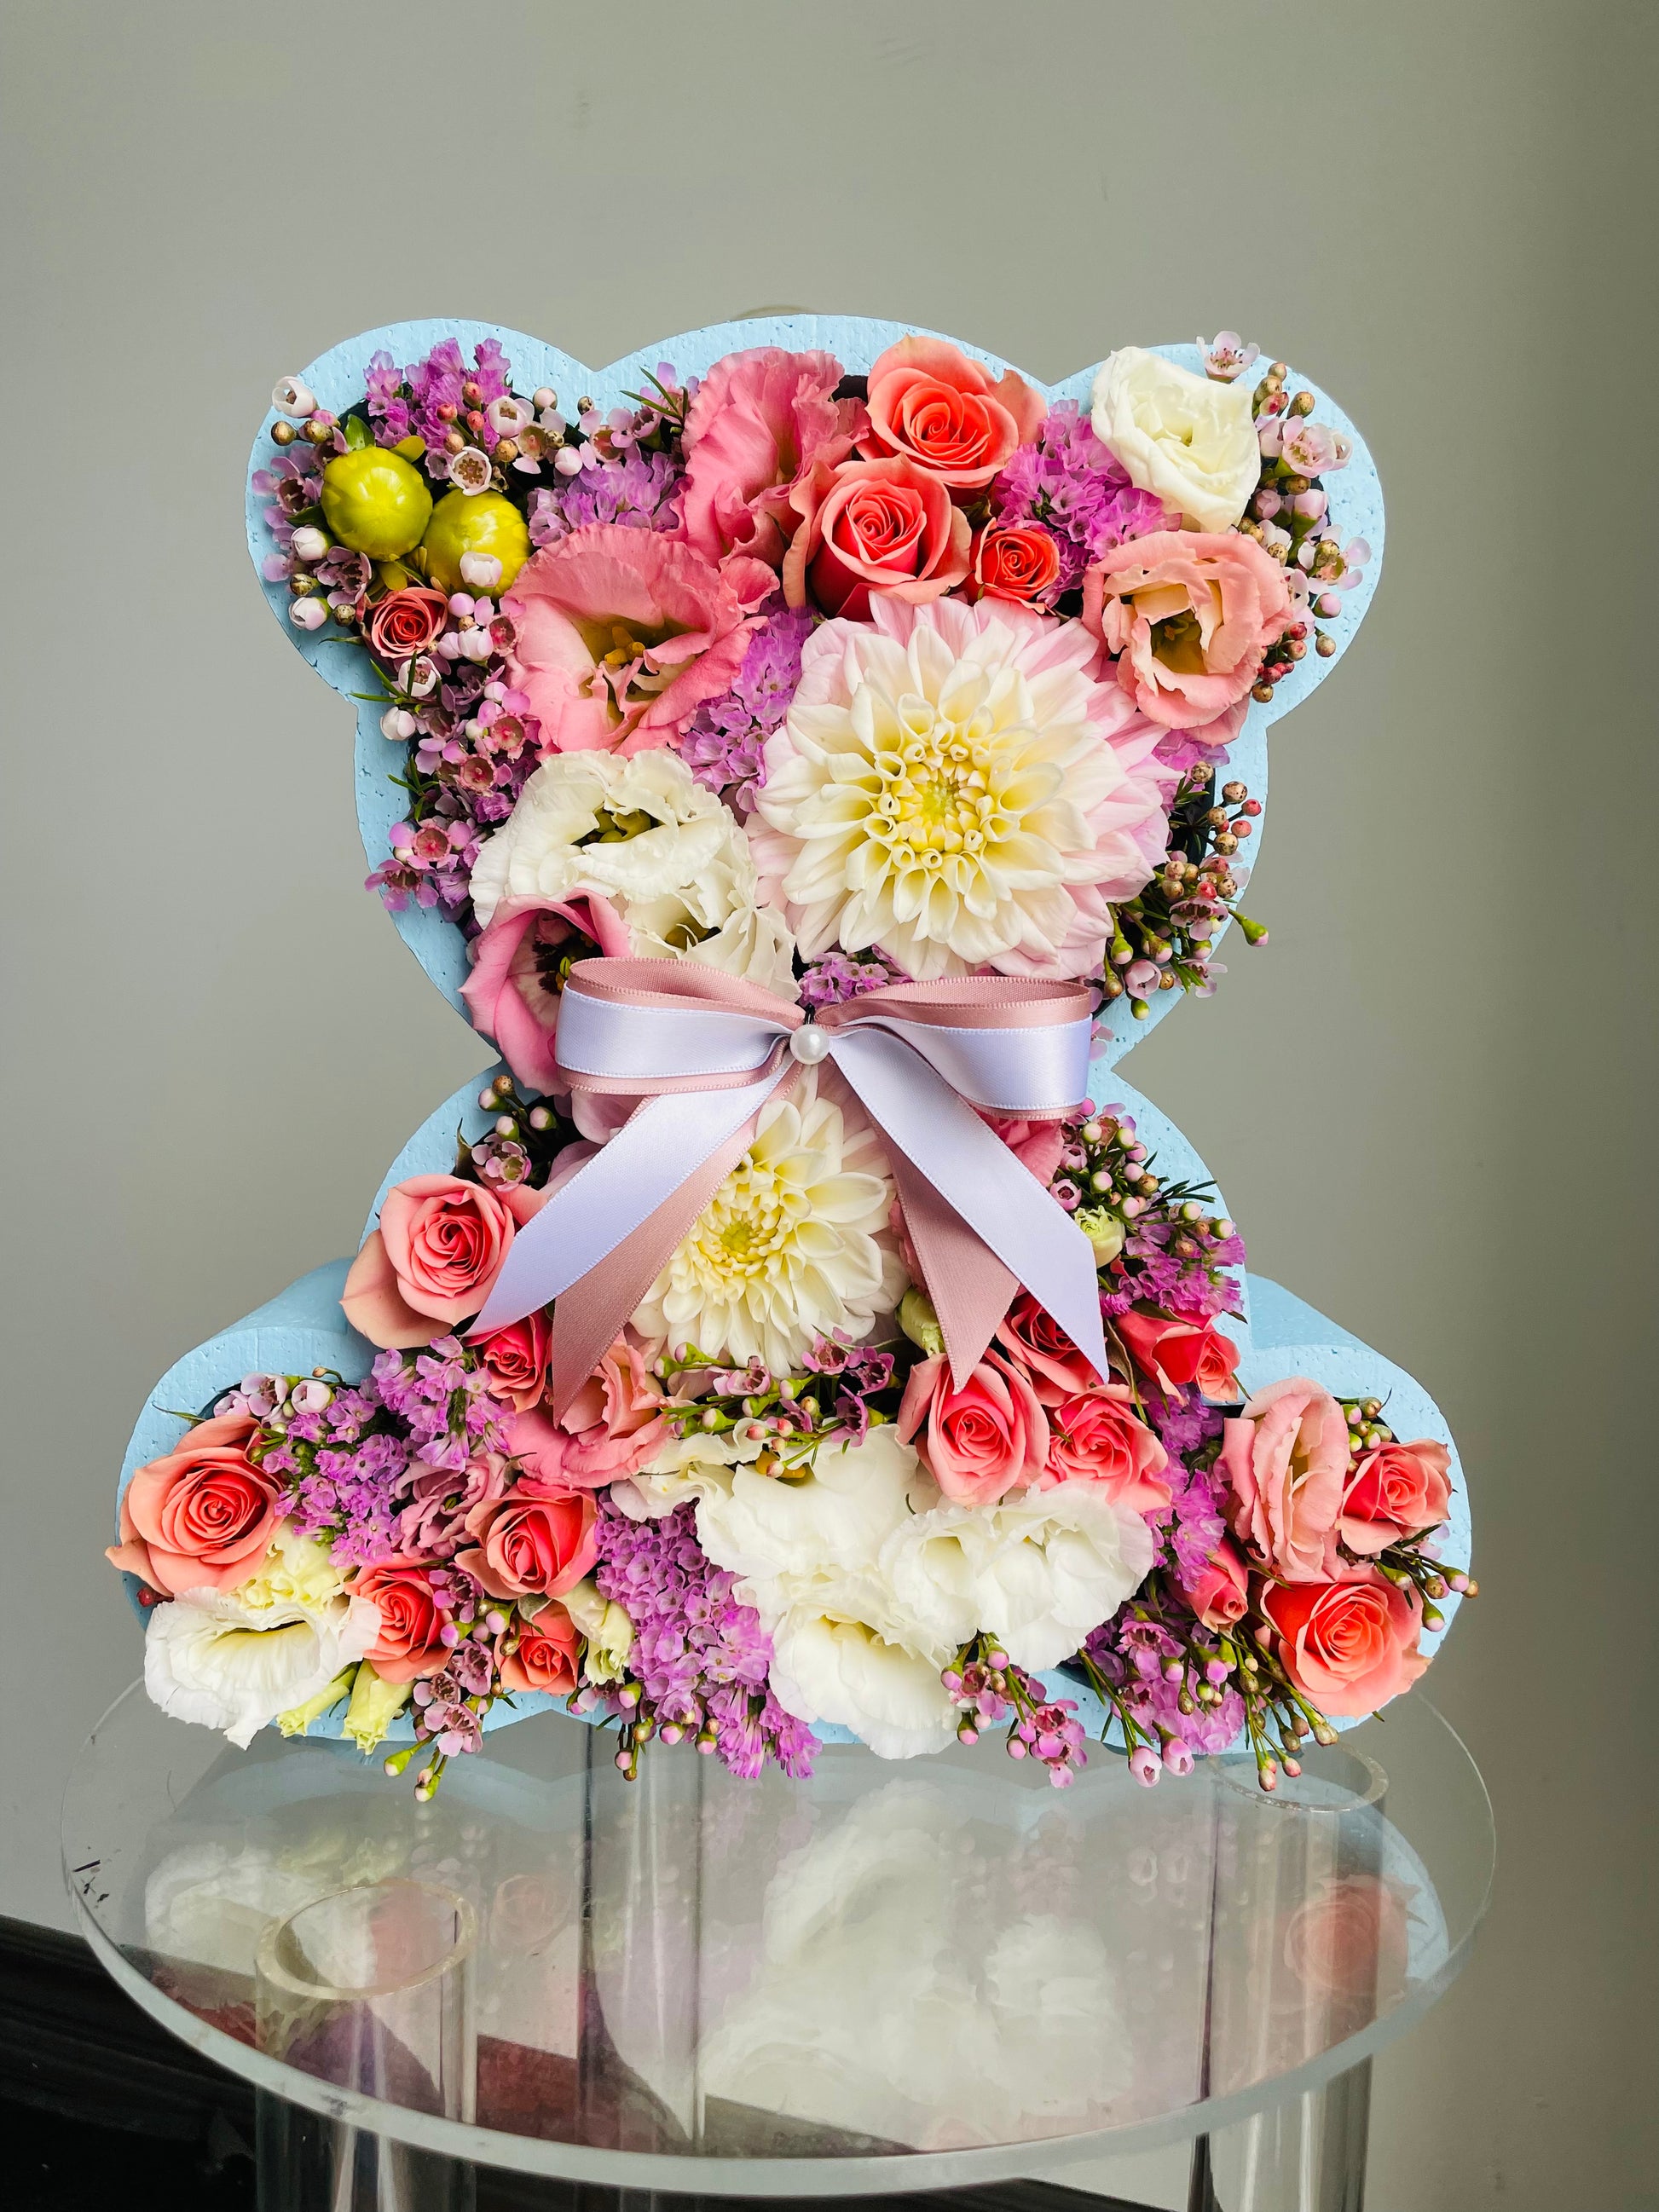 Teddy Bear Box with fresh flowers - Toy Florist